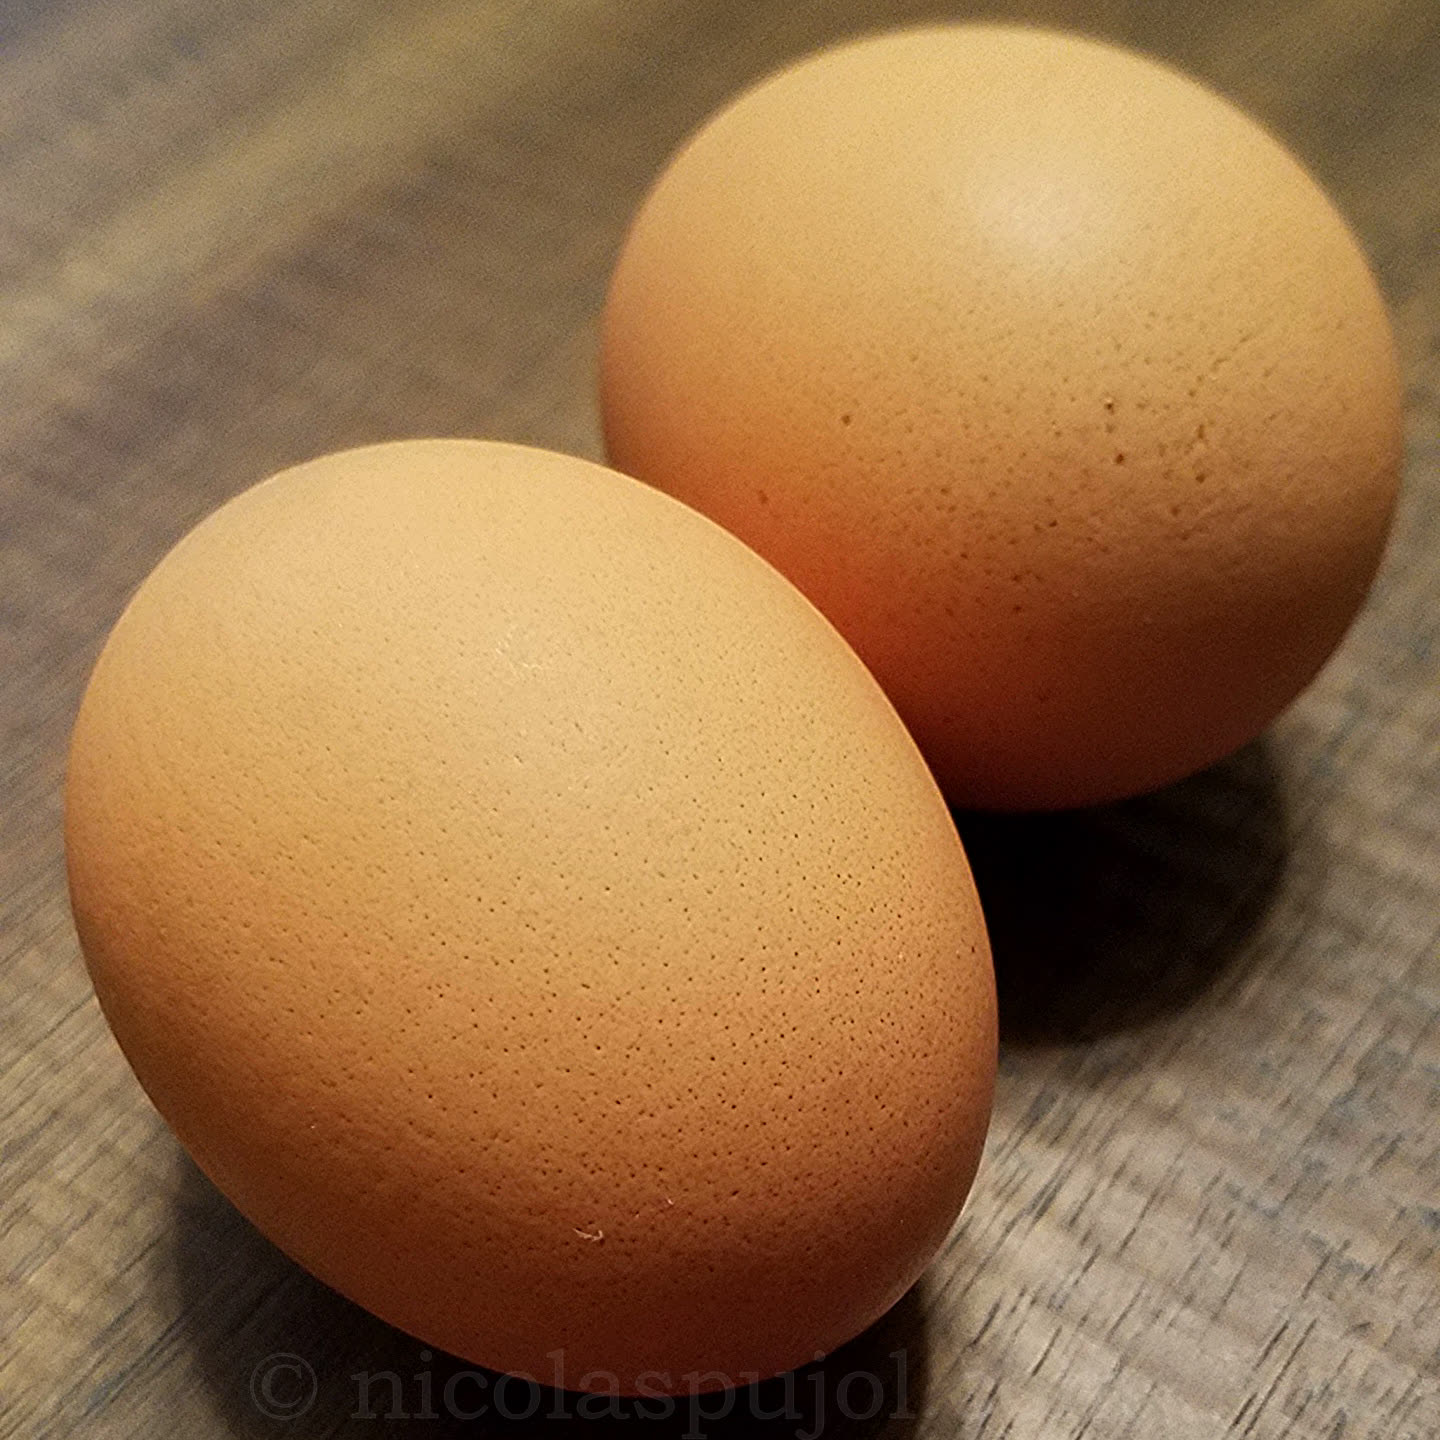 https://www.nicolaspujol.com/wp-content/uploads/2018/02/2-large-organic-brown-eggs.jpg